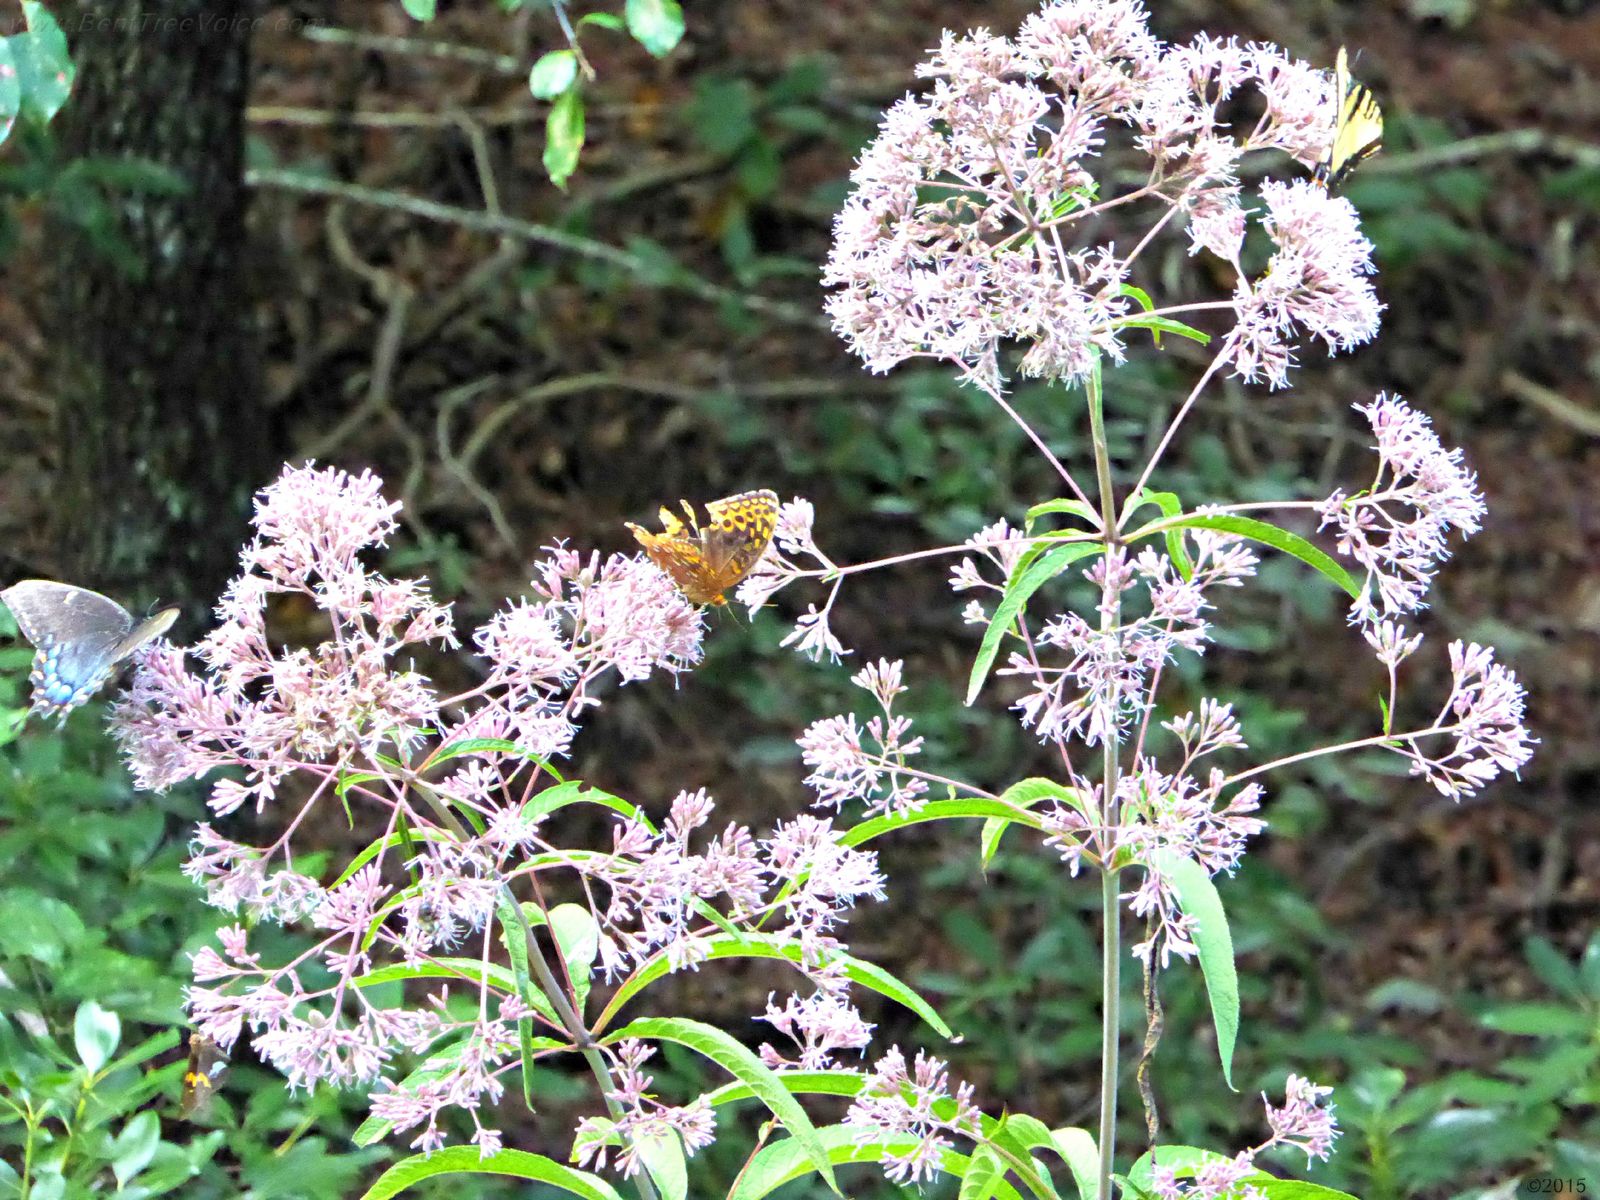 August 20, 2015 - Butterflies on Joe Pye Weed (click image to zoom)